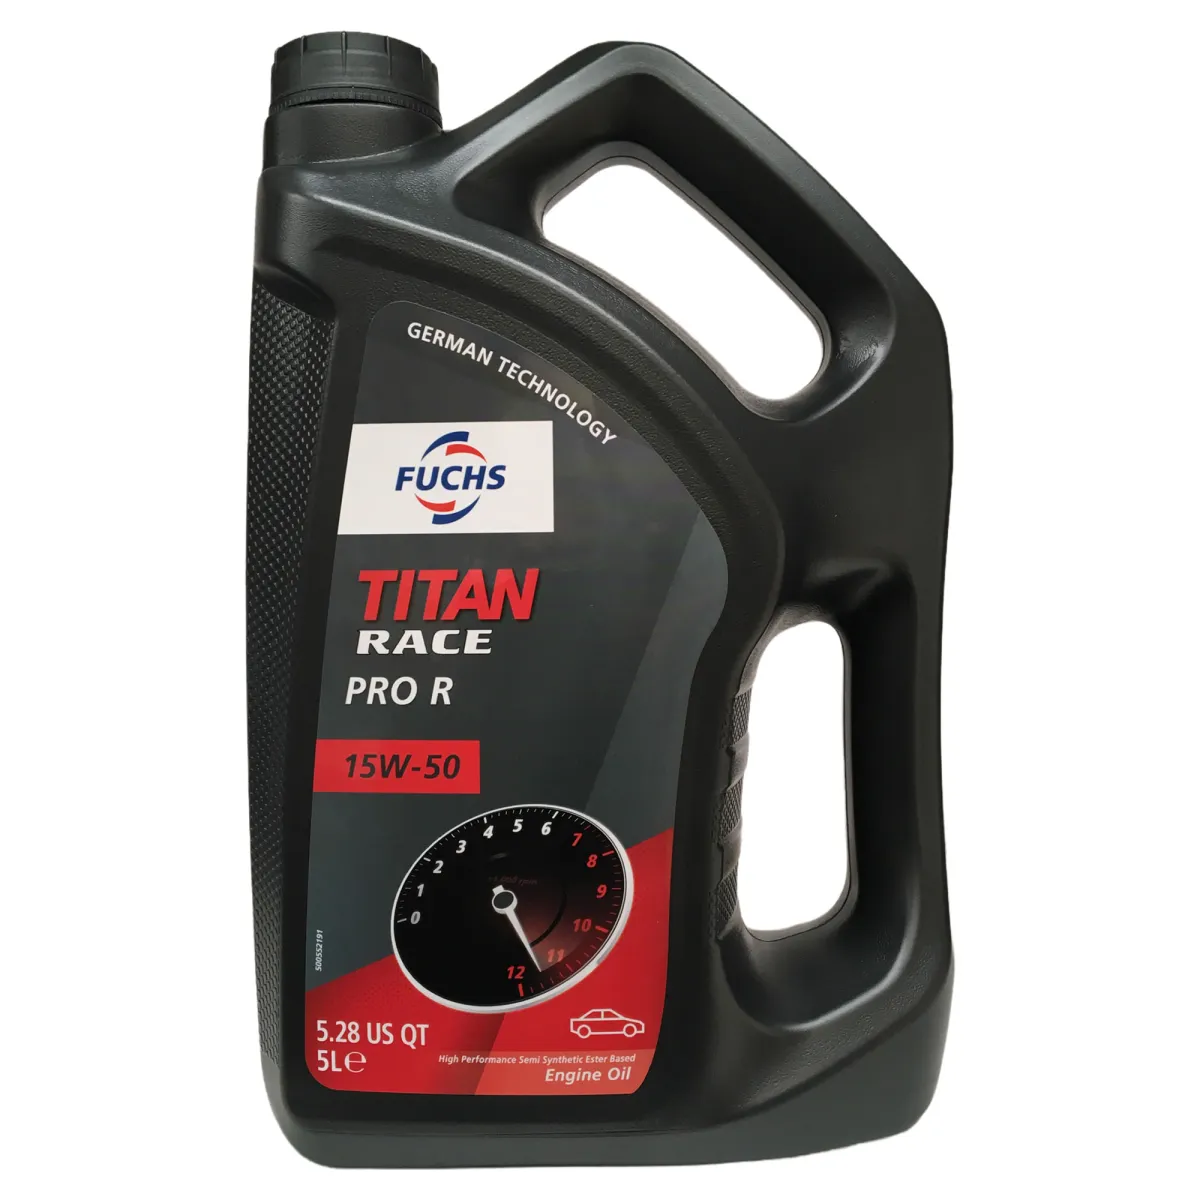 Fuchs Titan Race Pro S 15W50 Ester Synthetic Engine Oil